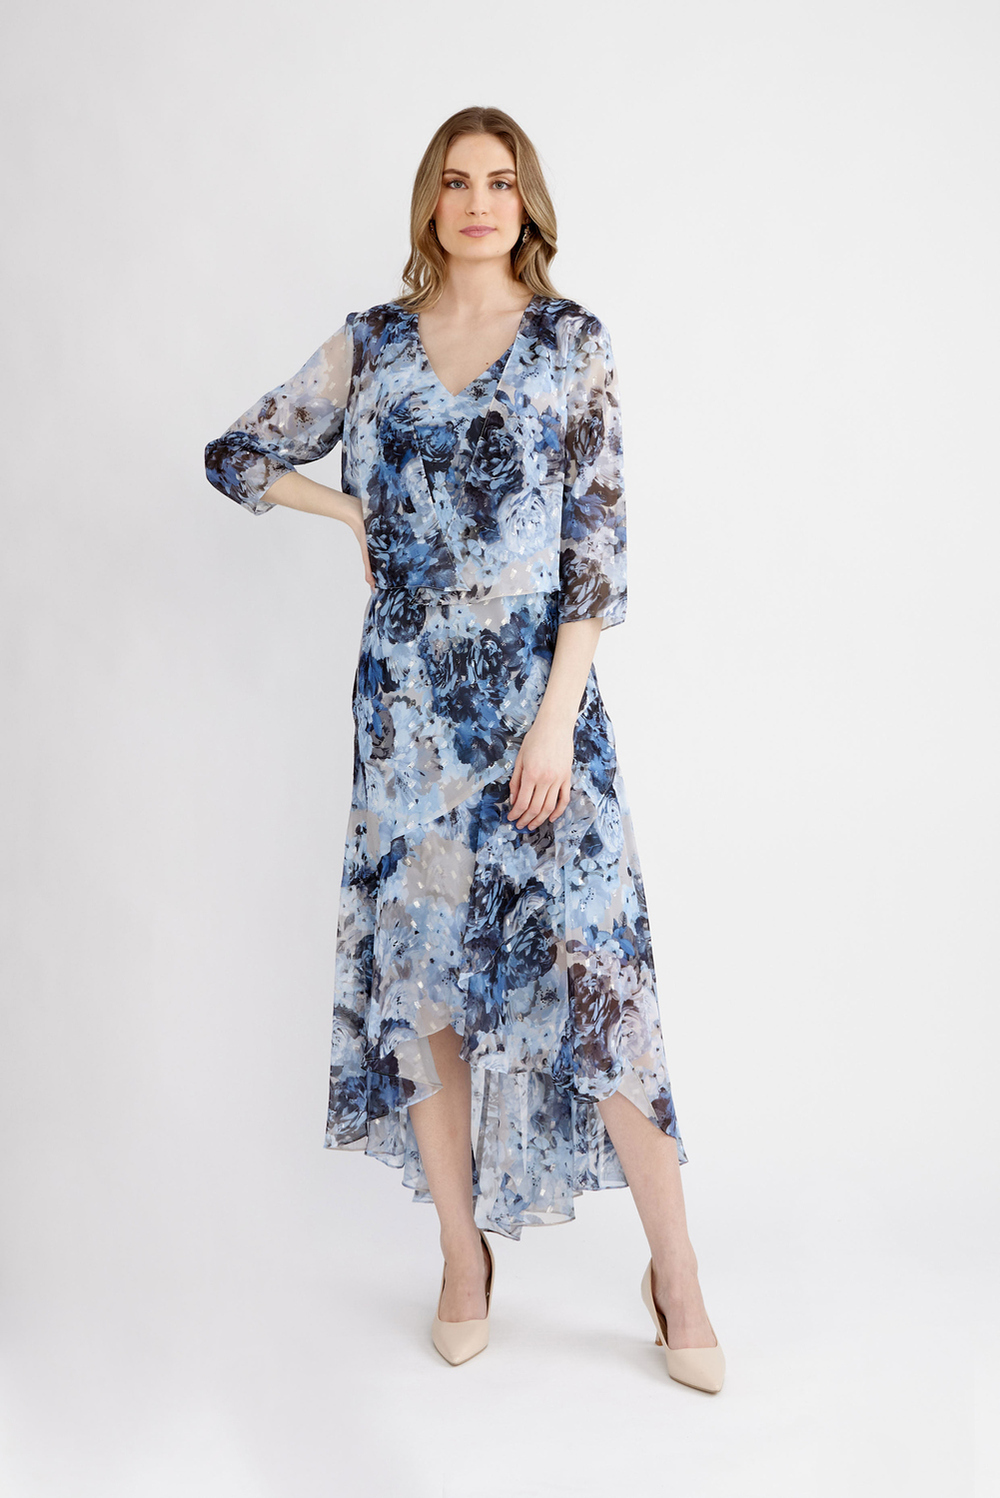 Tulip High-Low Hem Dress Style 8175915. Blue/multi